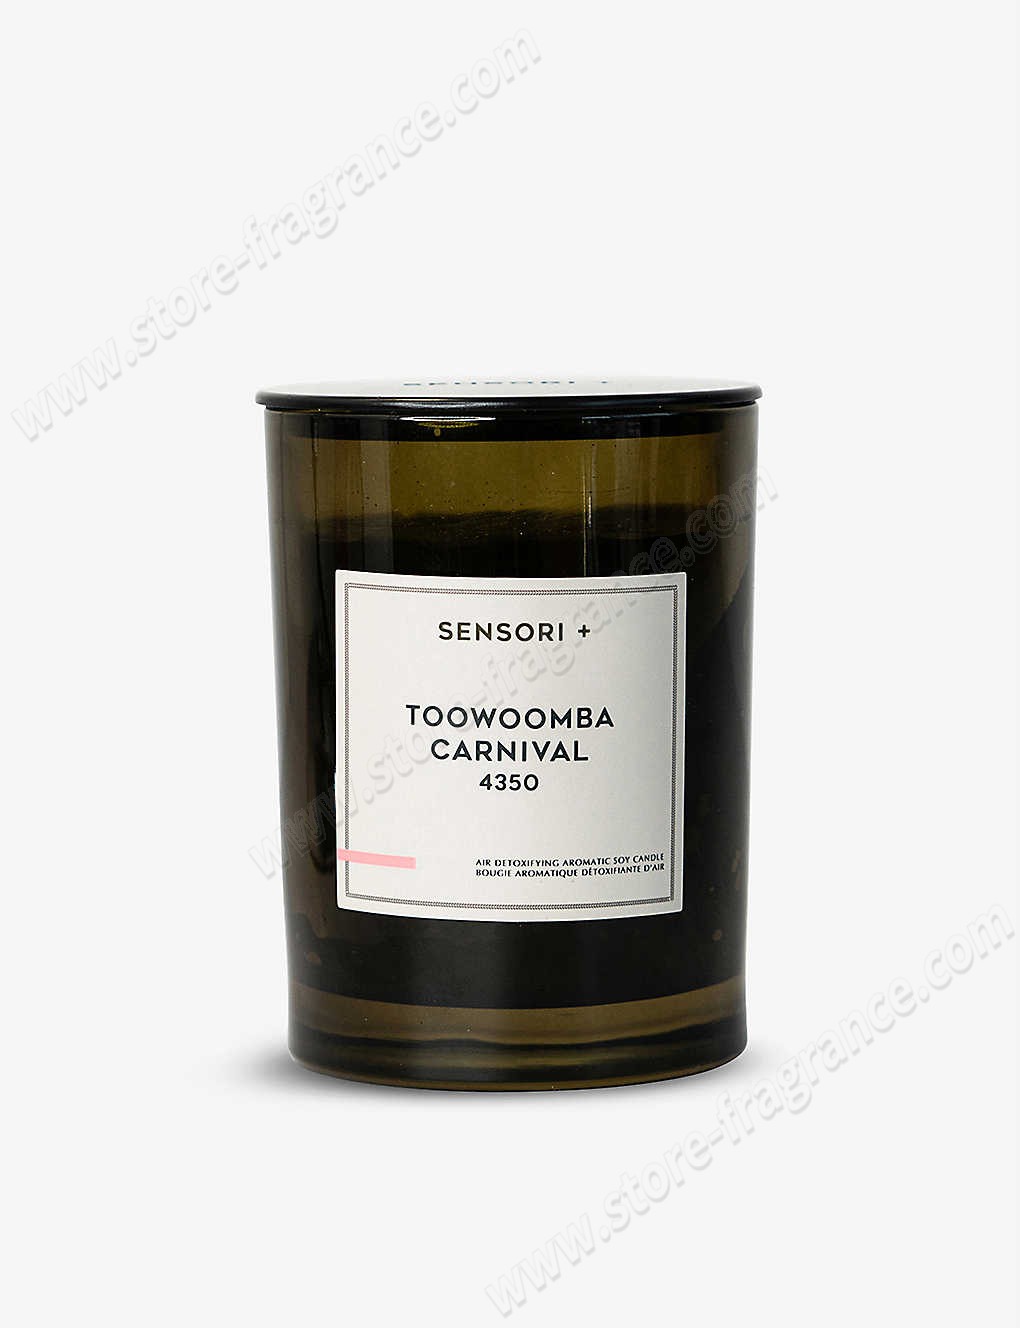 SENSORI+/Detoxifying Gayndah Toowoomba Carnival 4350 scented candle 260g ✿ Discount Store - SENSORI+/Detoxifying Gayndah Toowoomba Carnival 4350 scented candle 260g ✿ Discount Store